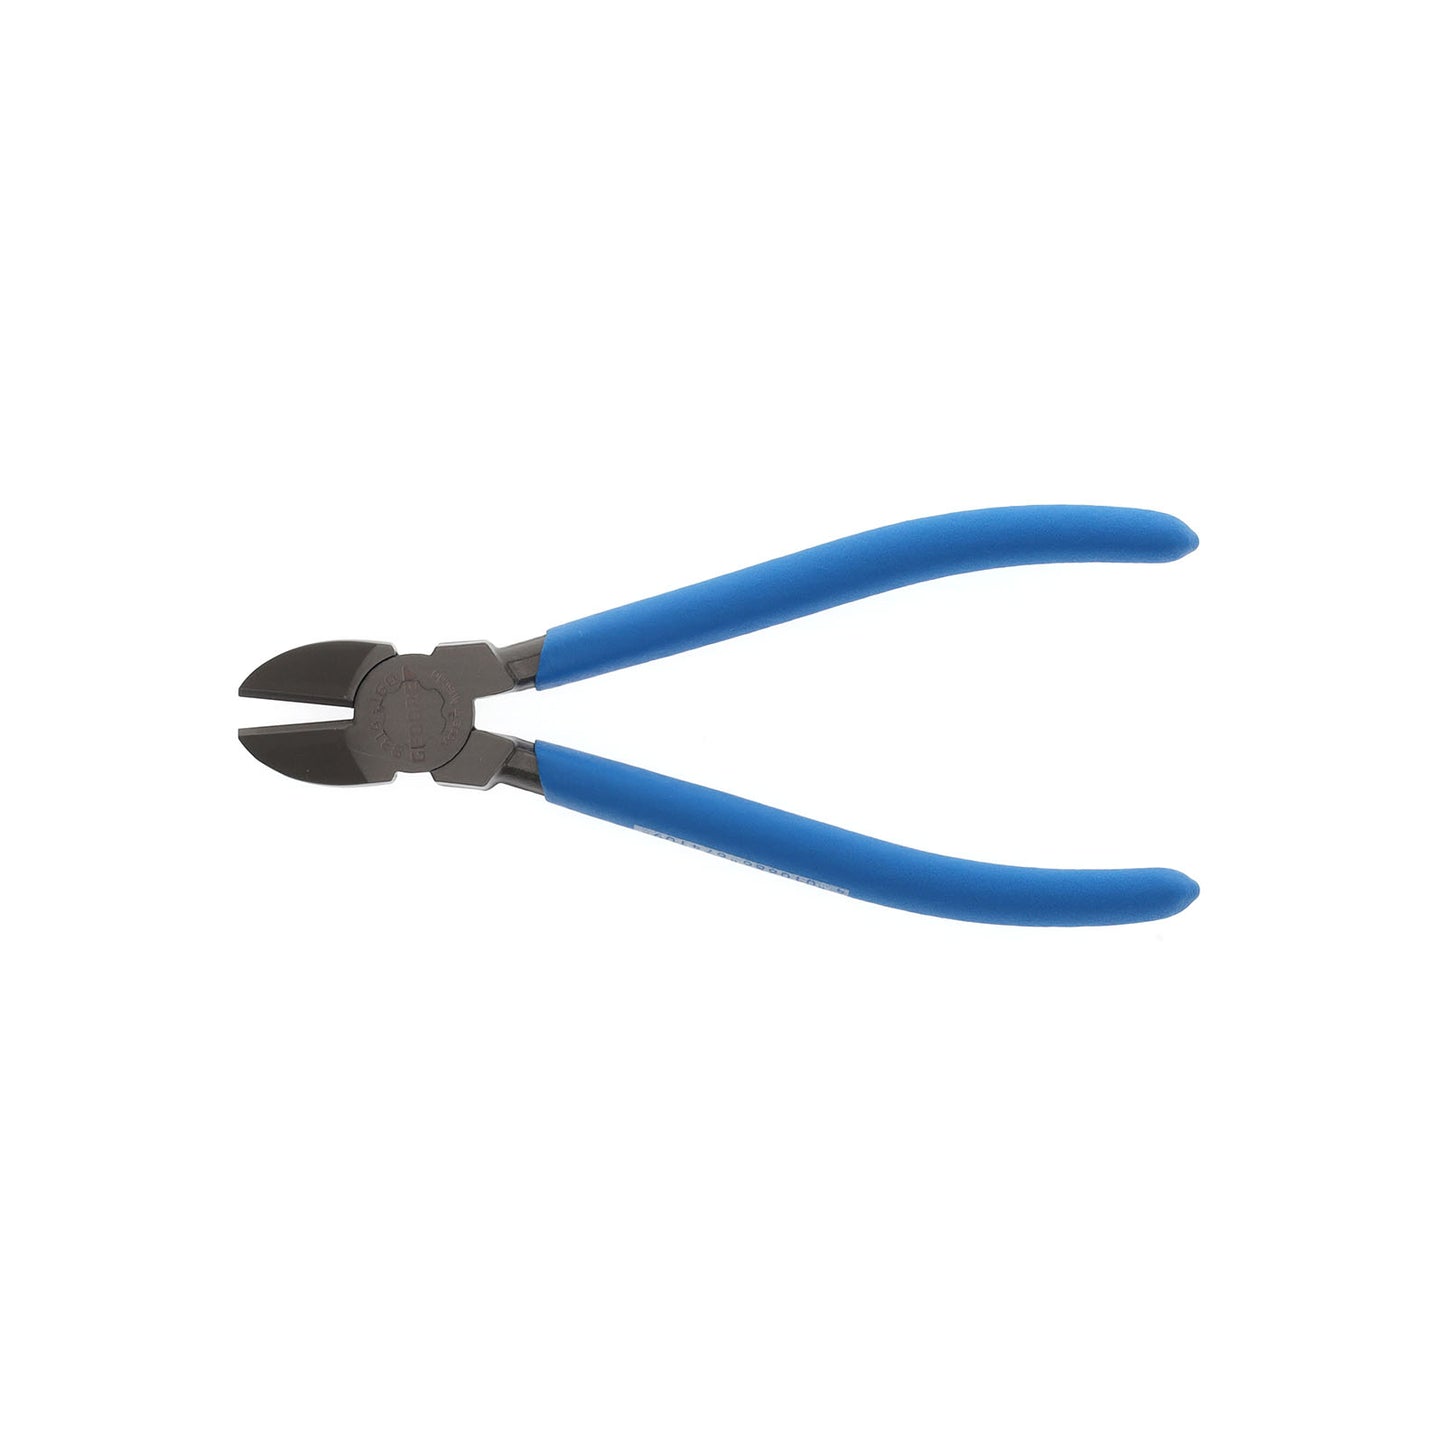 GEDORE 8314-160 TL - Diagonal cutting pliers 160 mm (6741090)